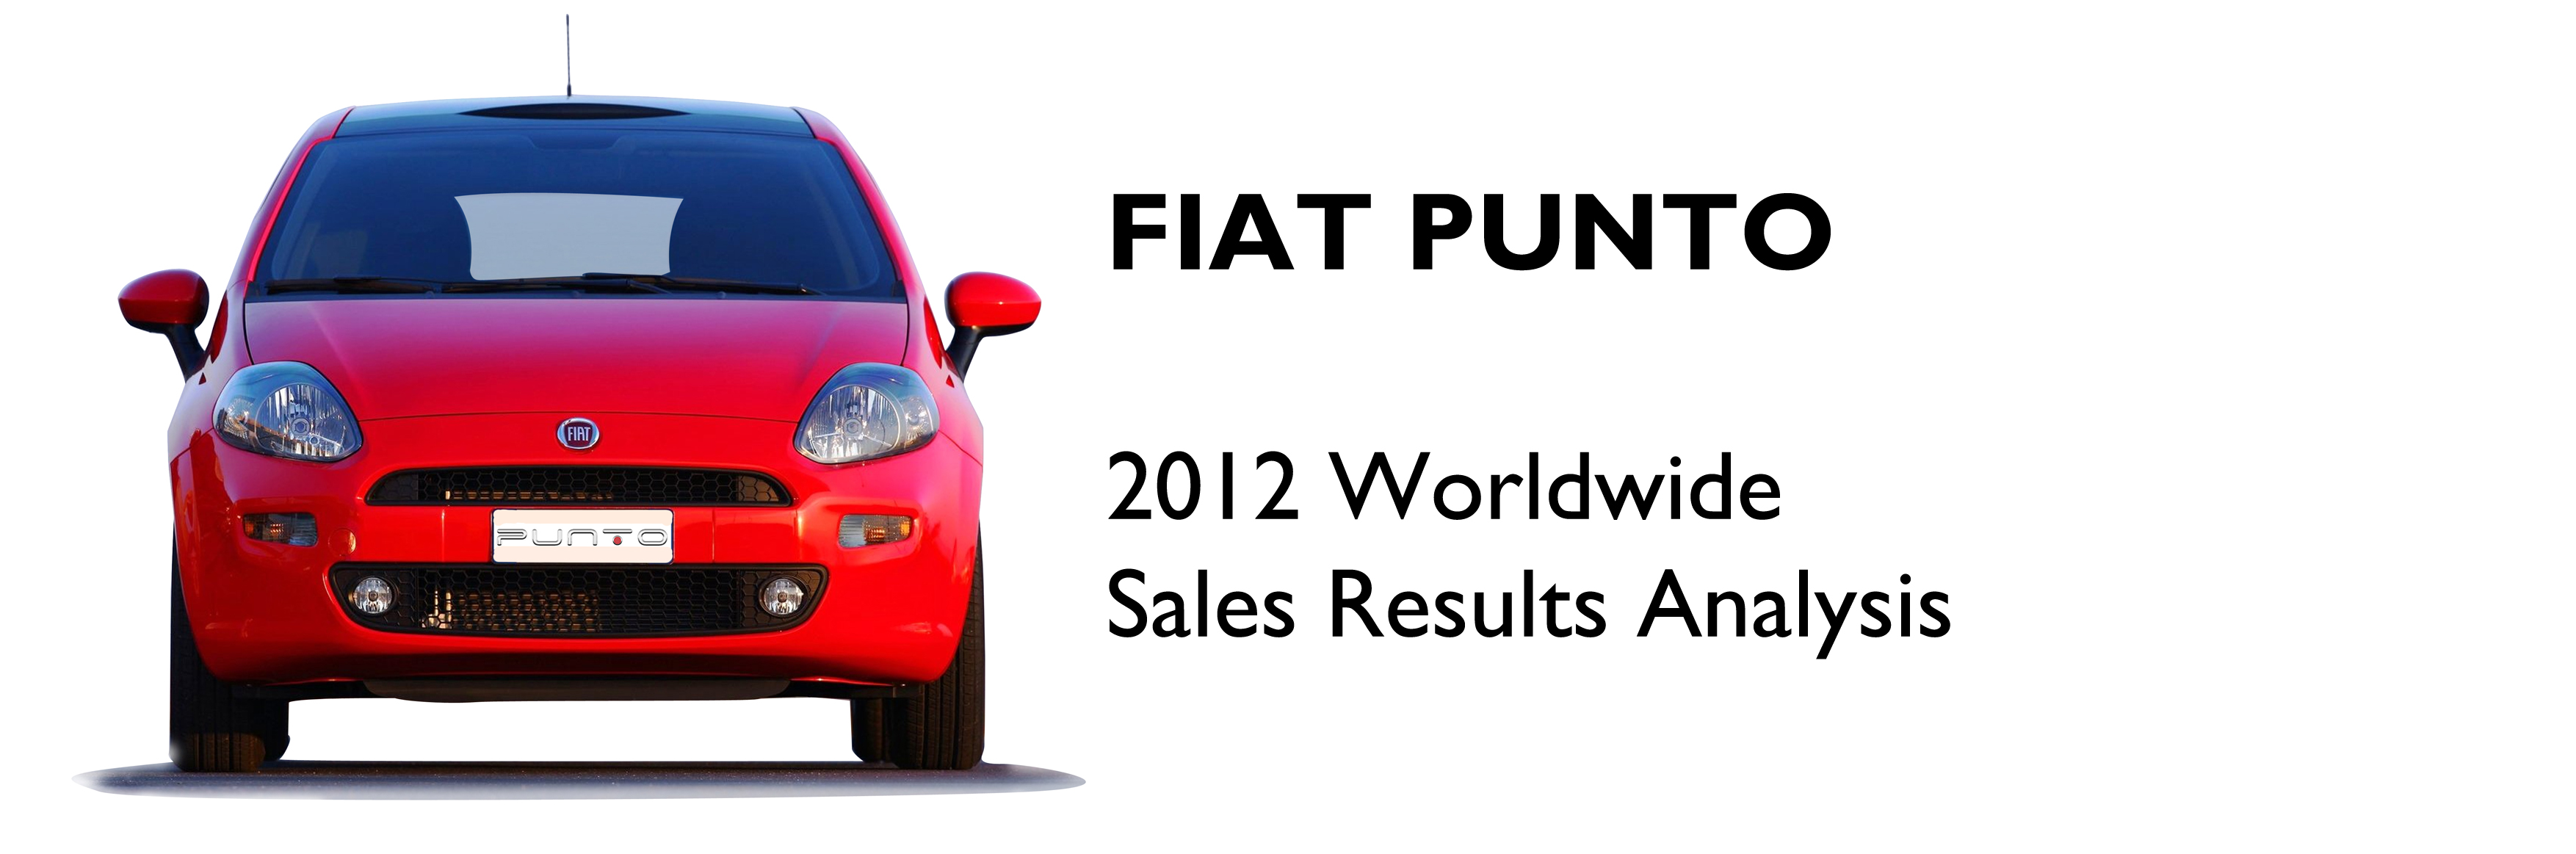 Fiat Punto 12 Full Year Analysis Fiat Group World